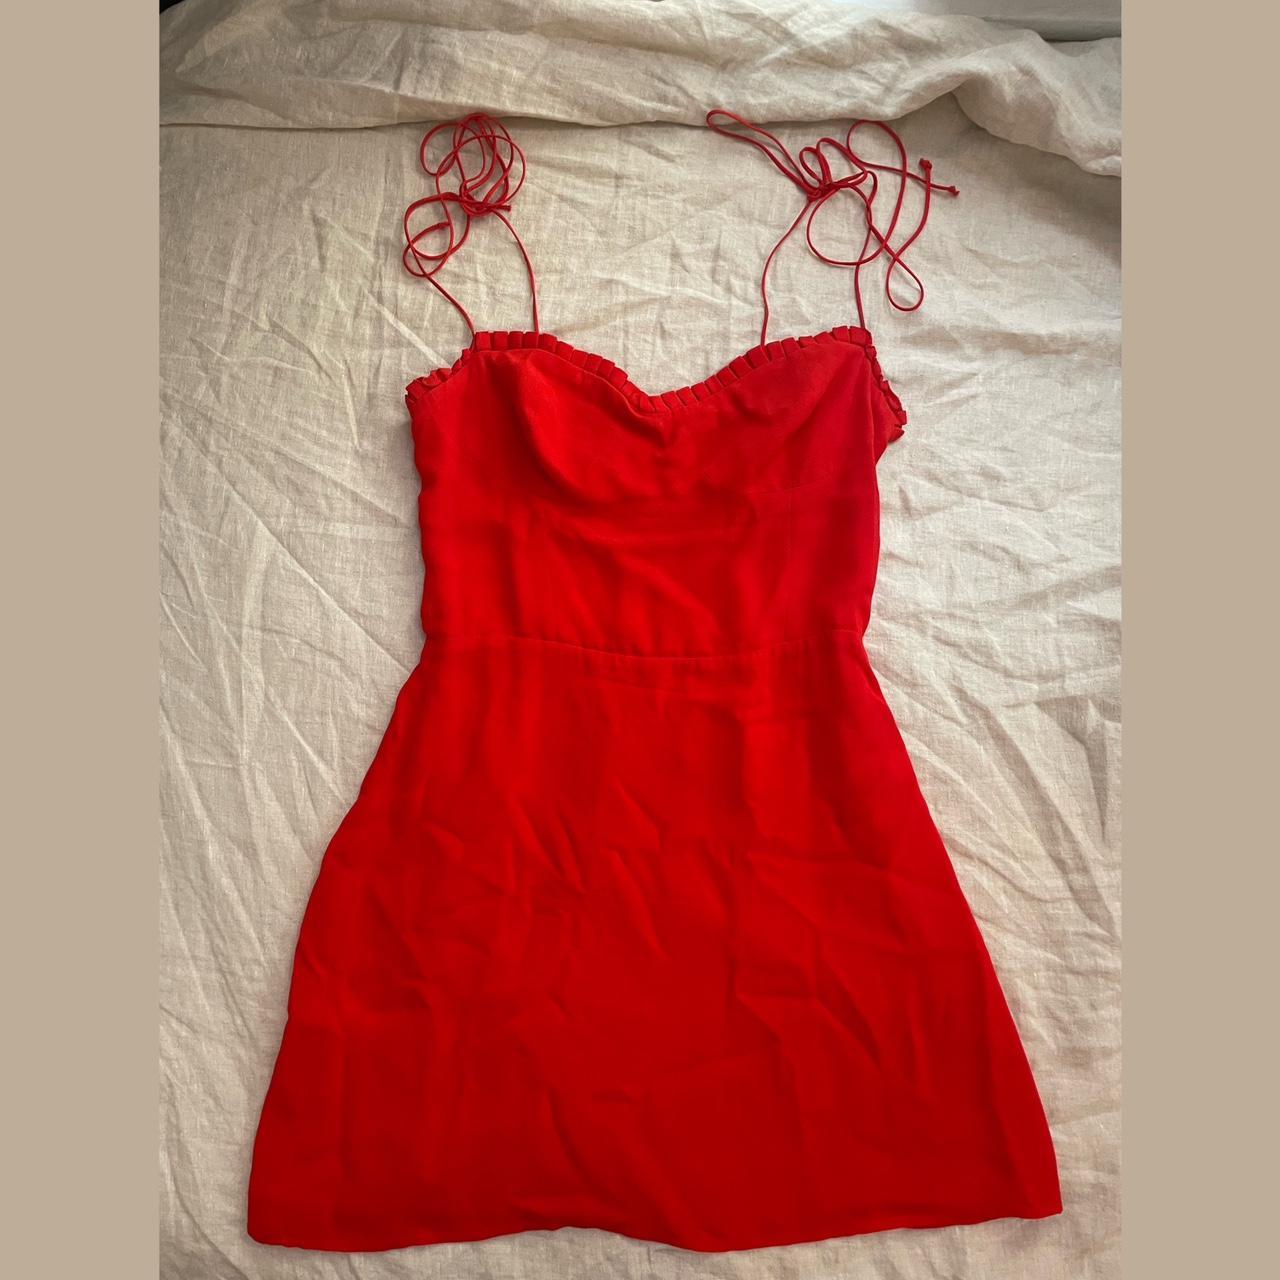 Reformation Women's Red Dress | Depop